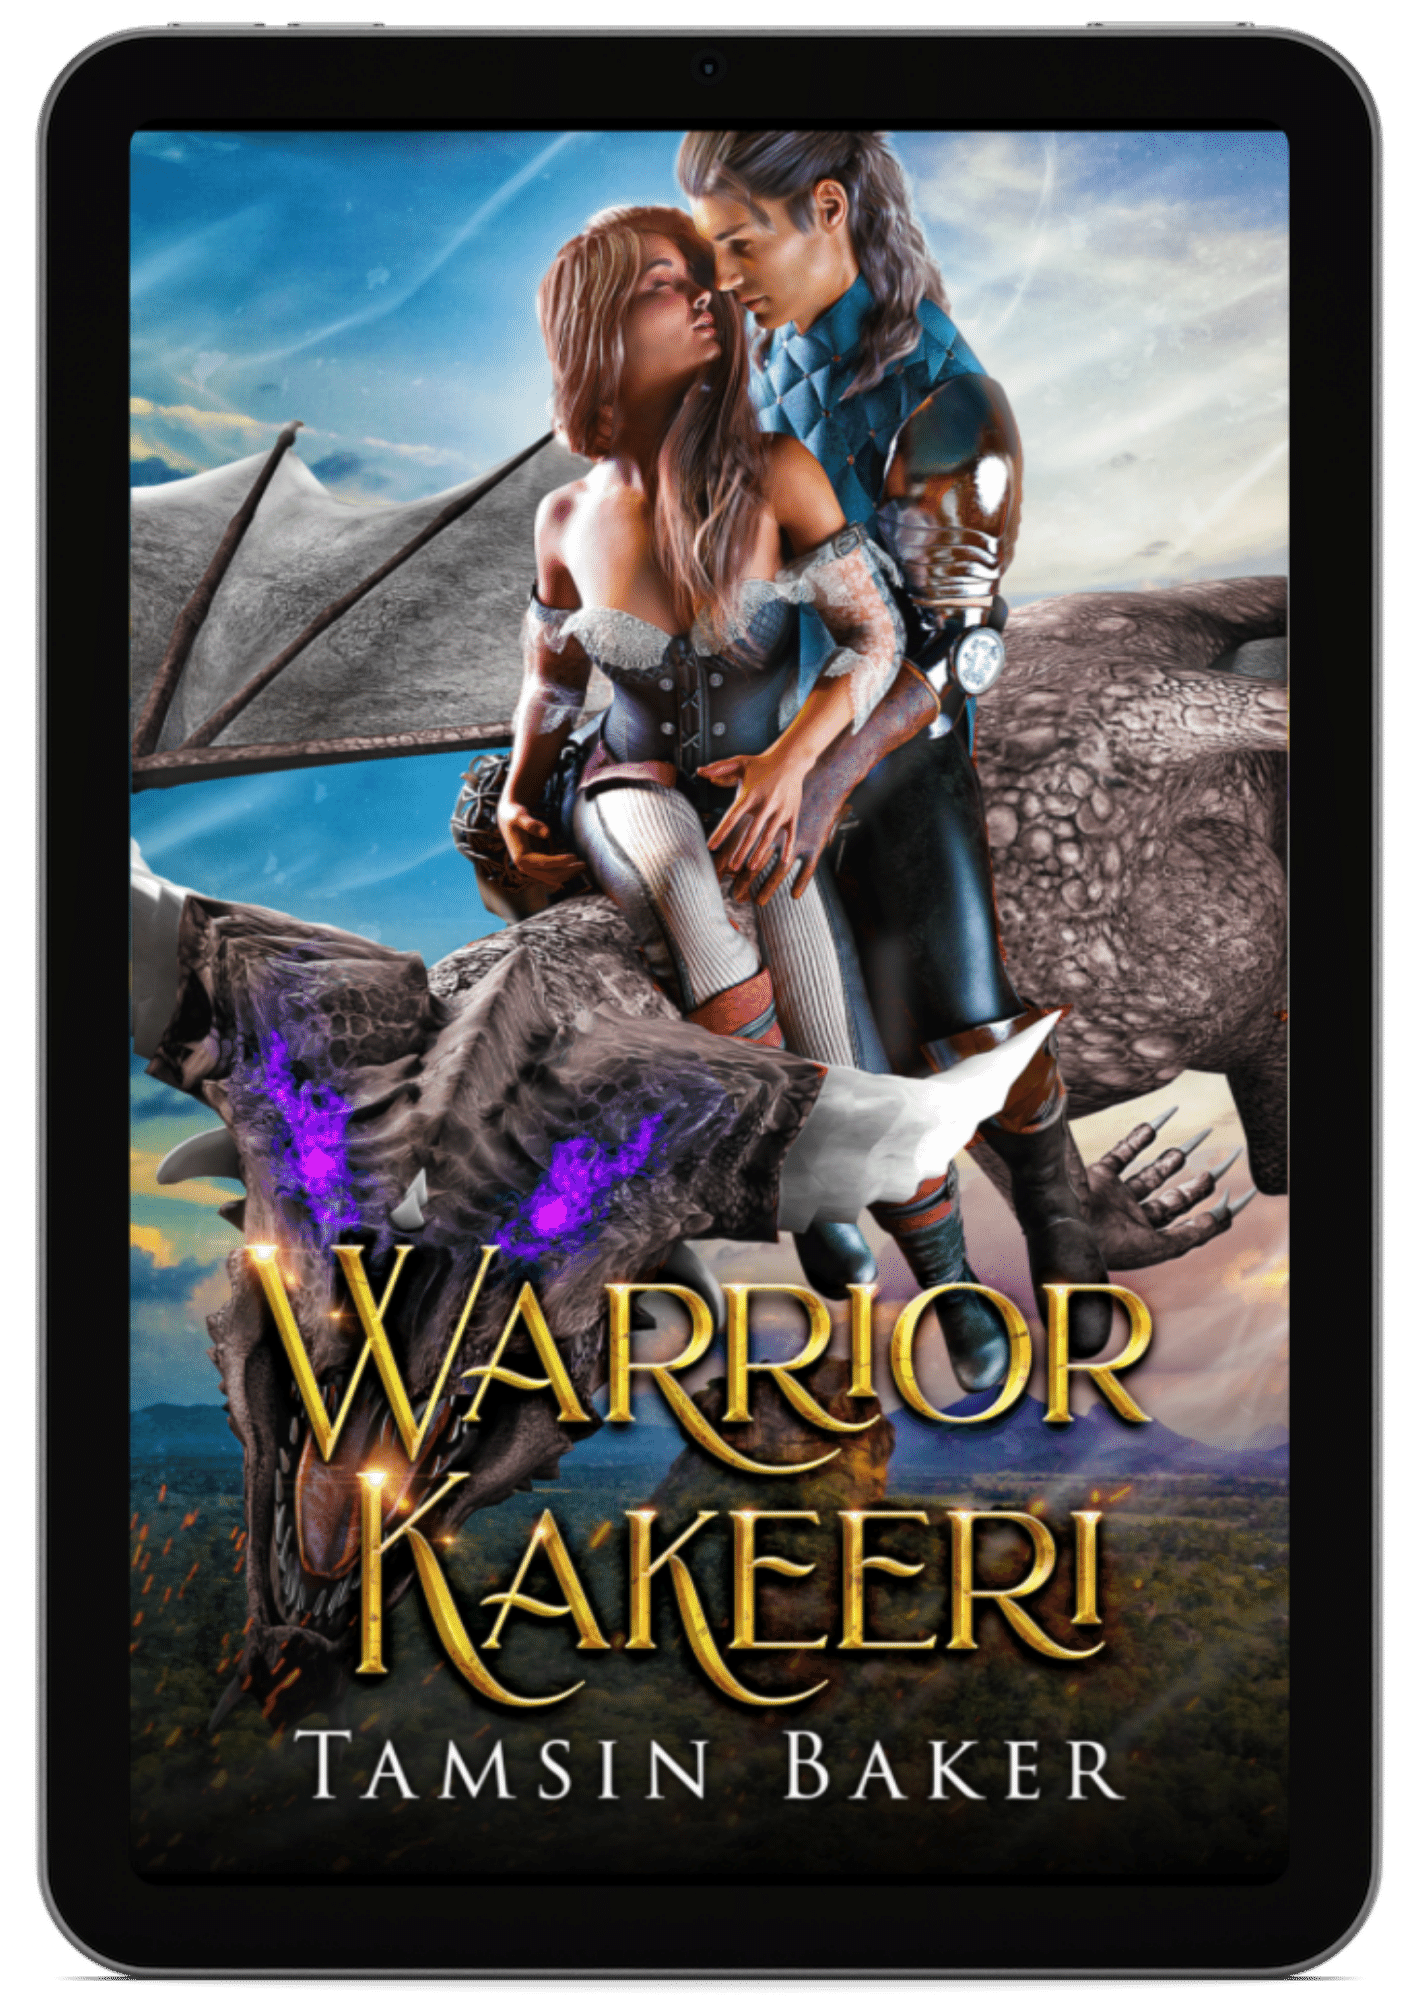 Warrior Nakeeri | Book 2 - Steamy Royal Tales of Dragon Riders